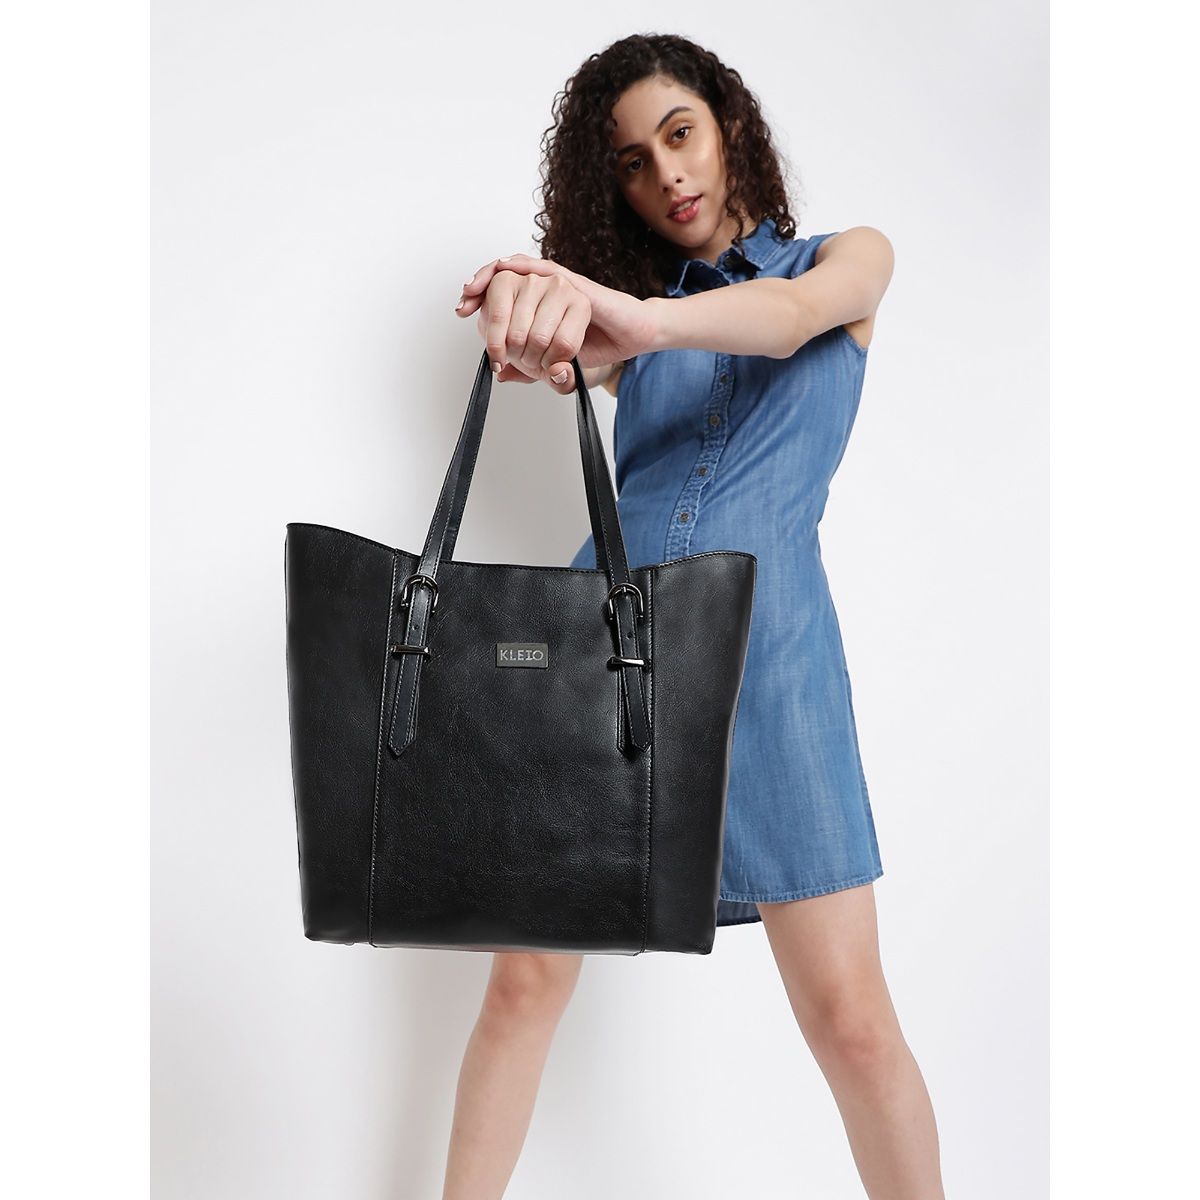 Bestselling Black Designer Leather Tote Bags  Shoulder Bags in 2018